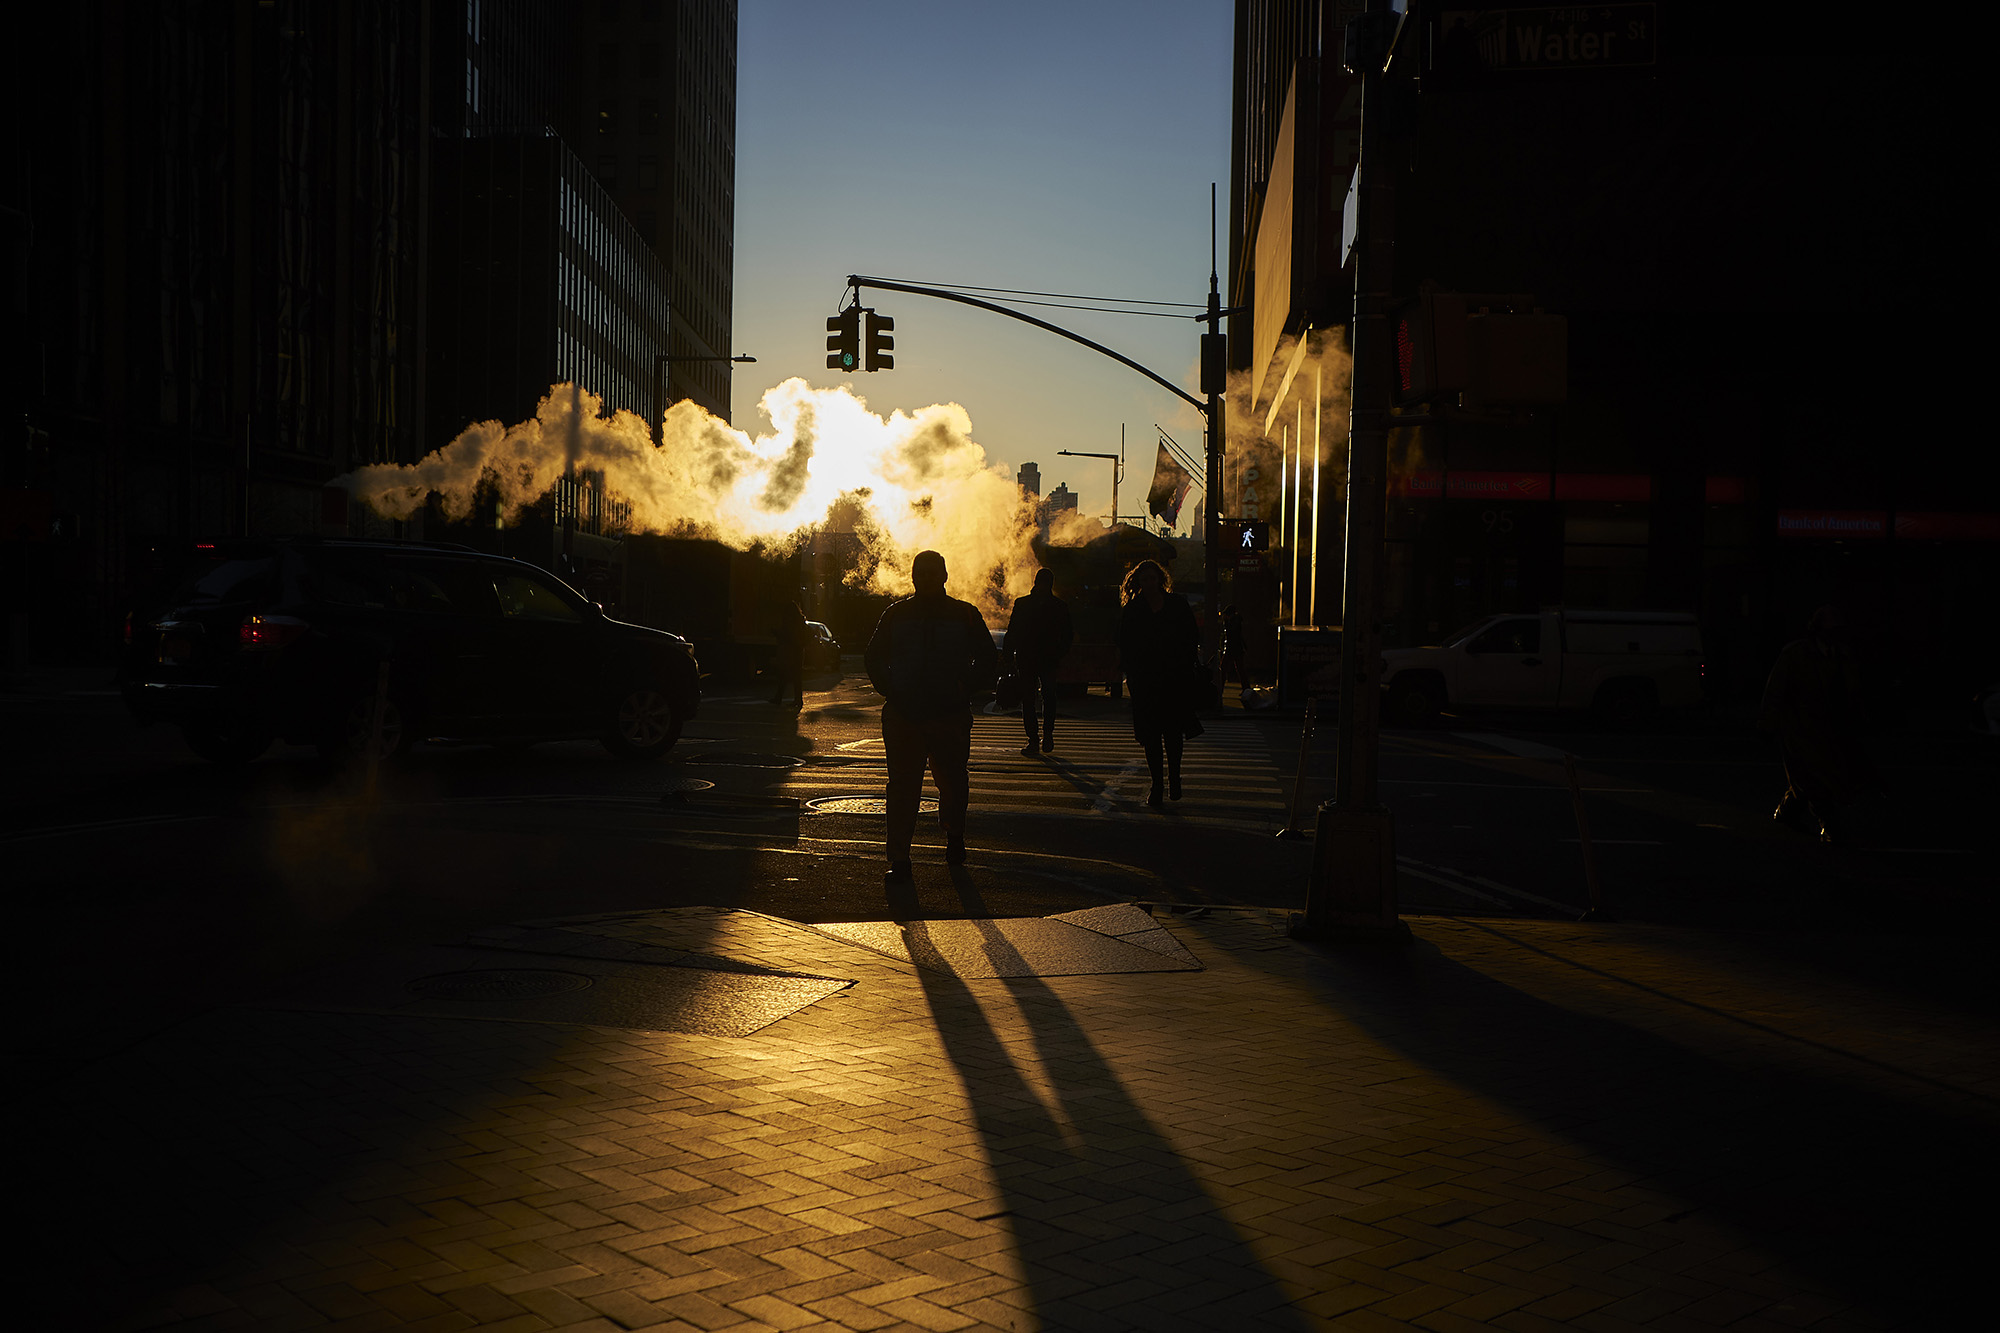 Steam rises as pedestrians cross a street near the New York Stock Exchange.